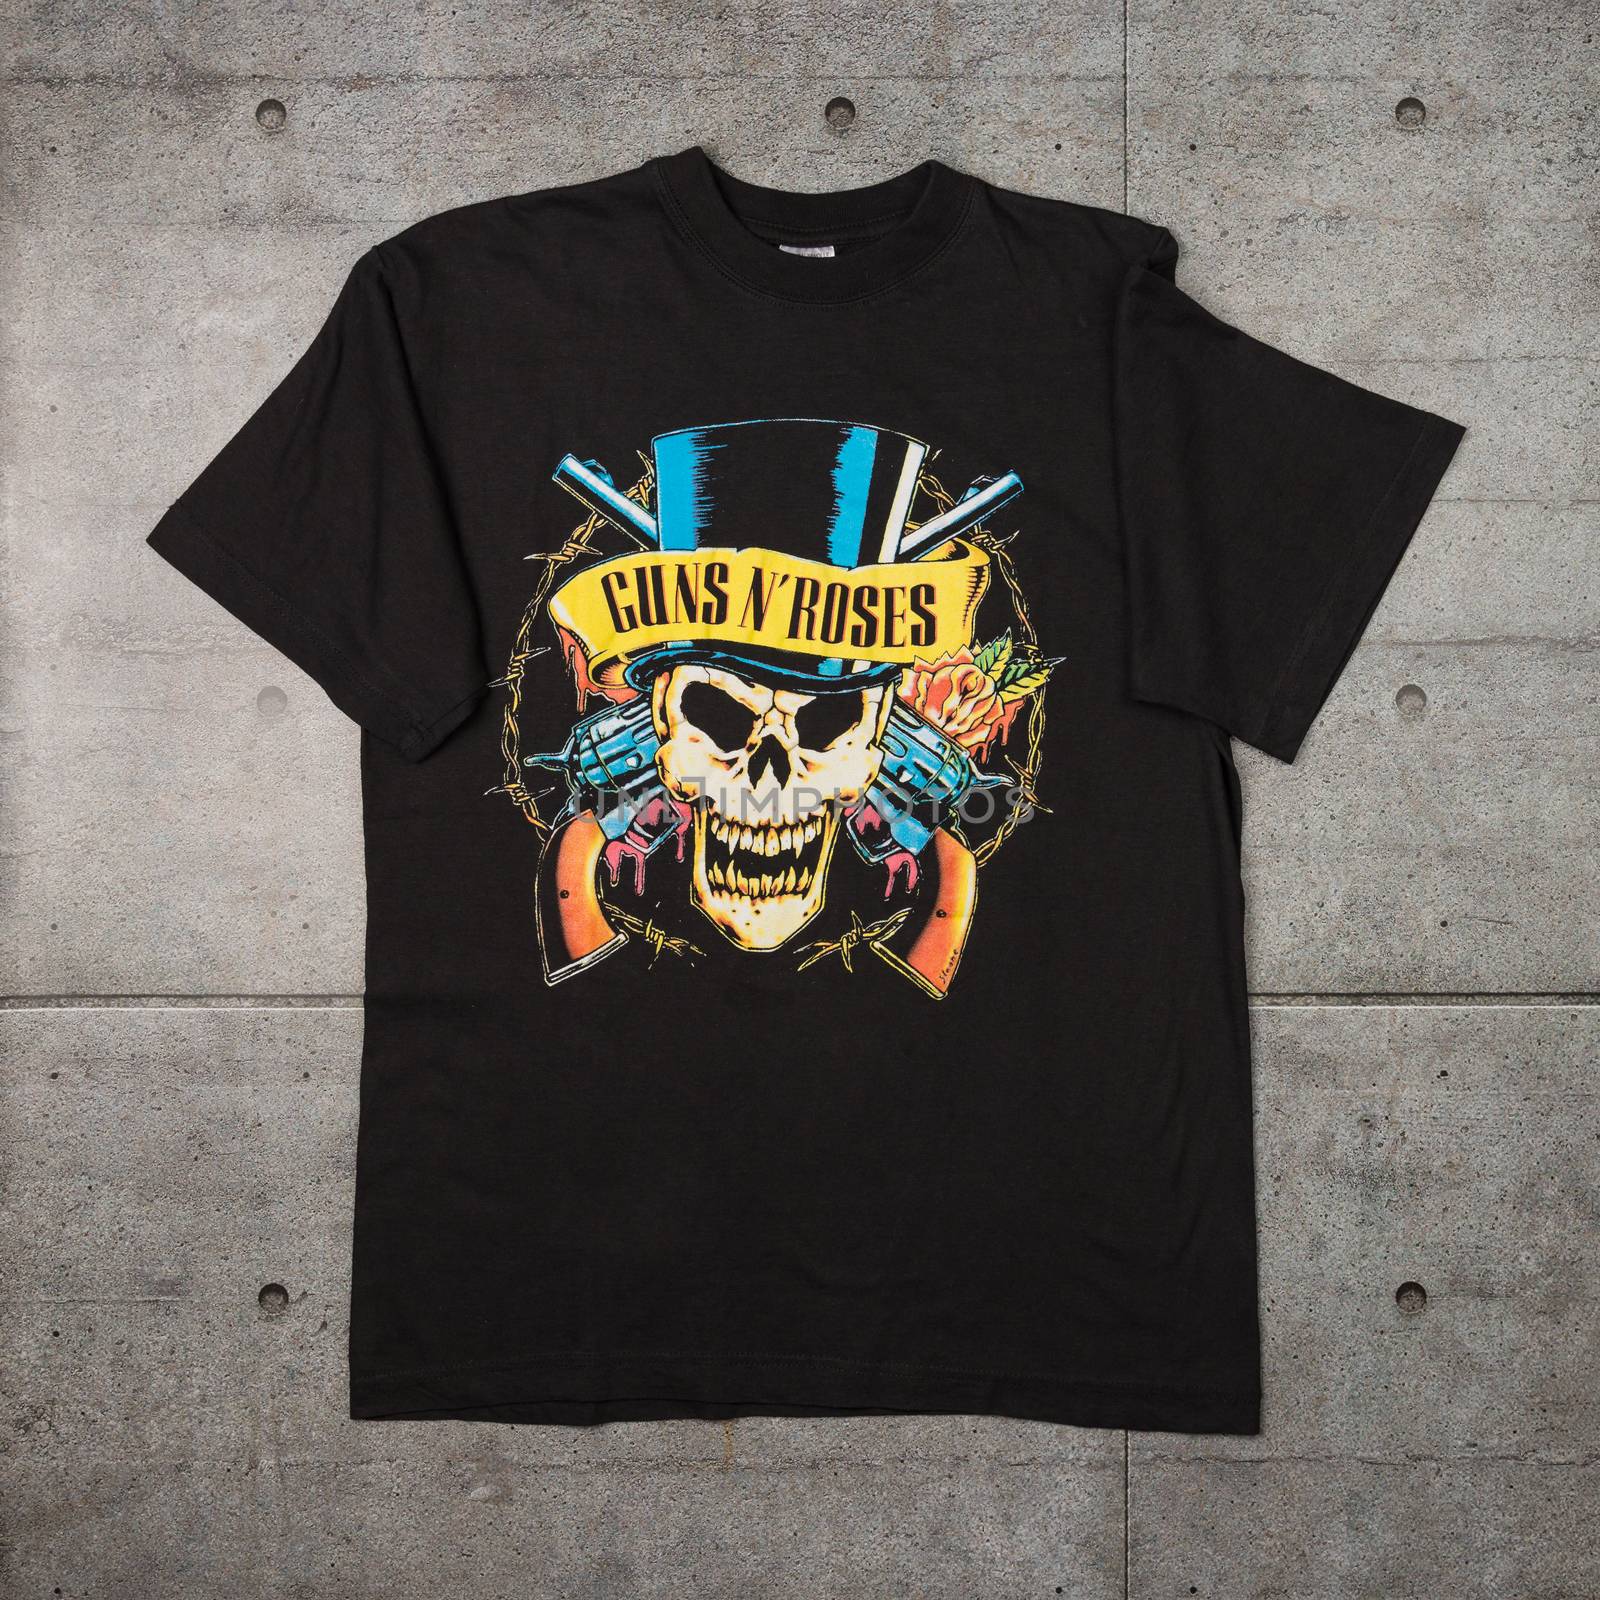 Guns n'  Roses merchandise t-shirt by homydesign